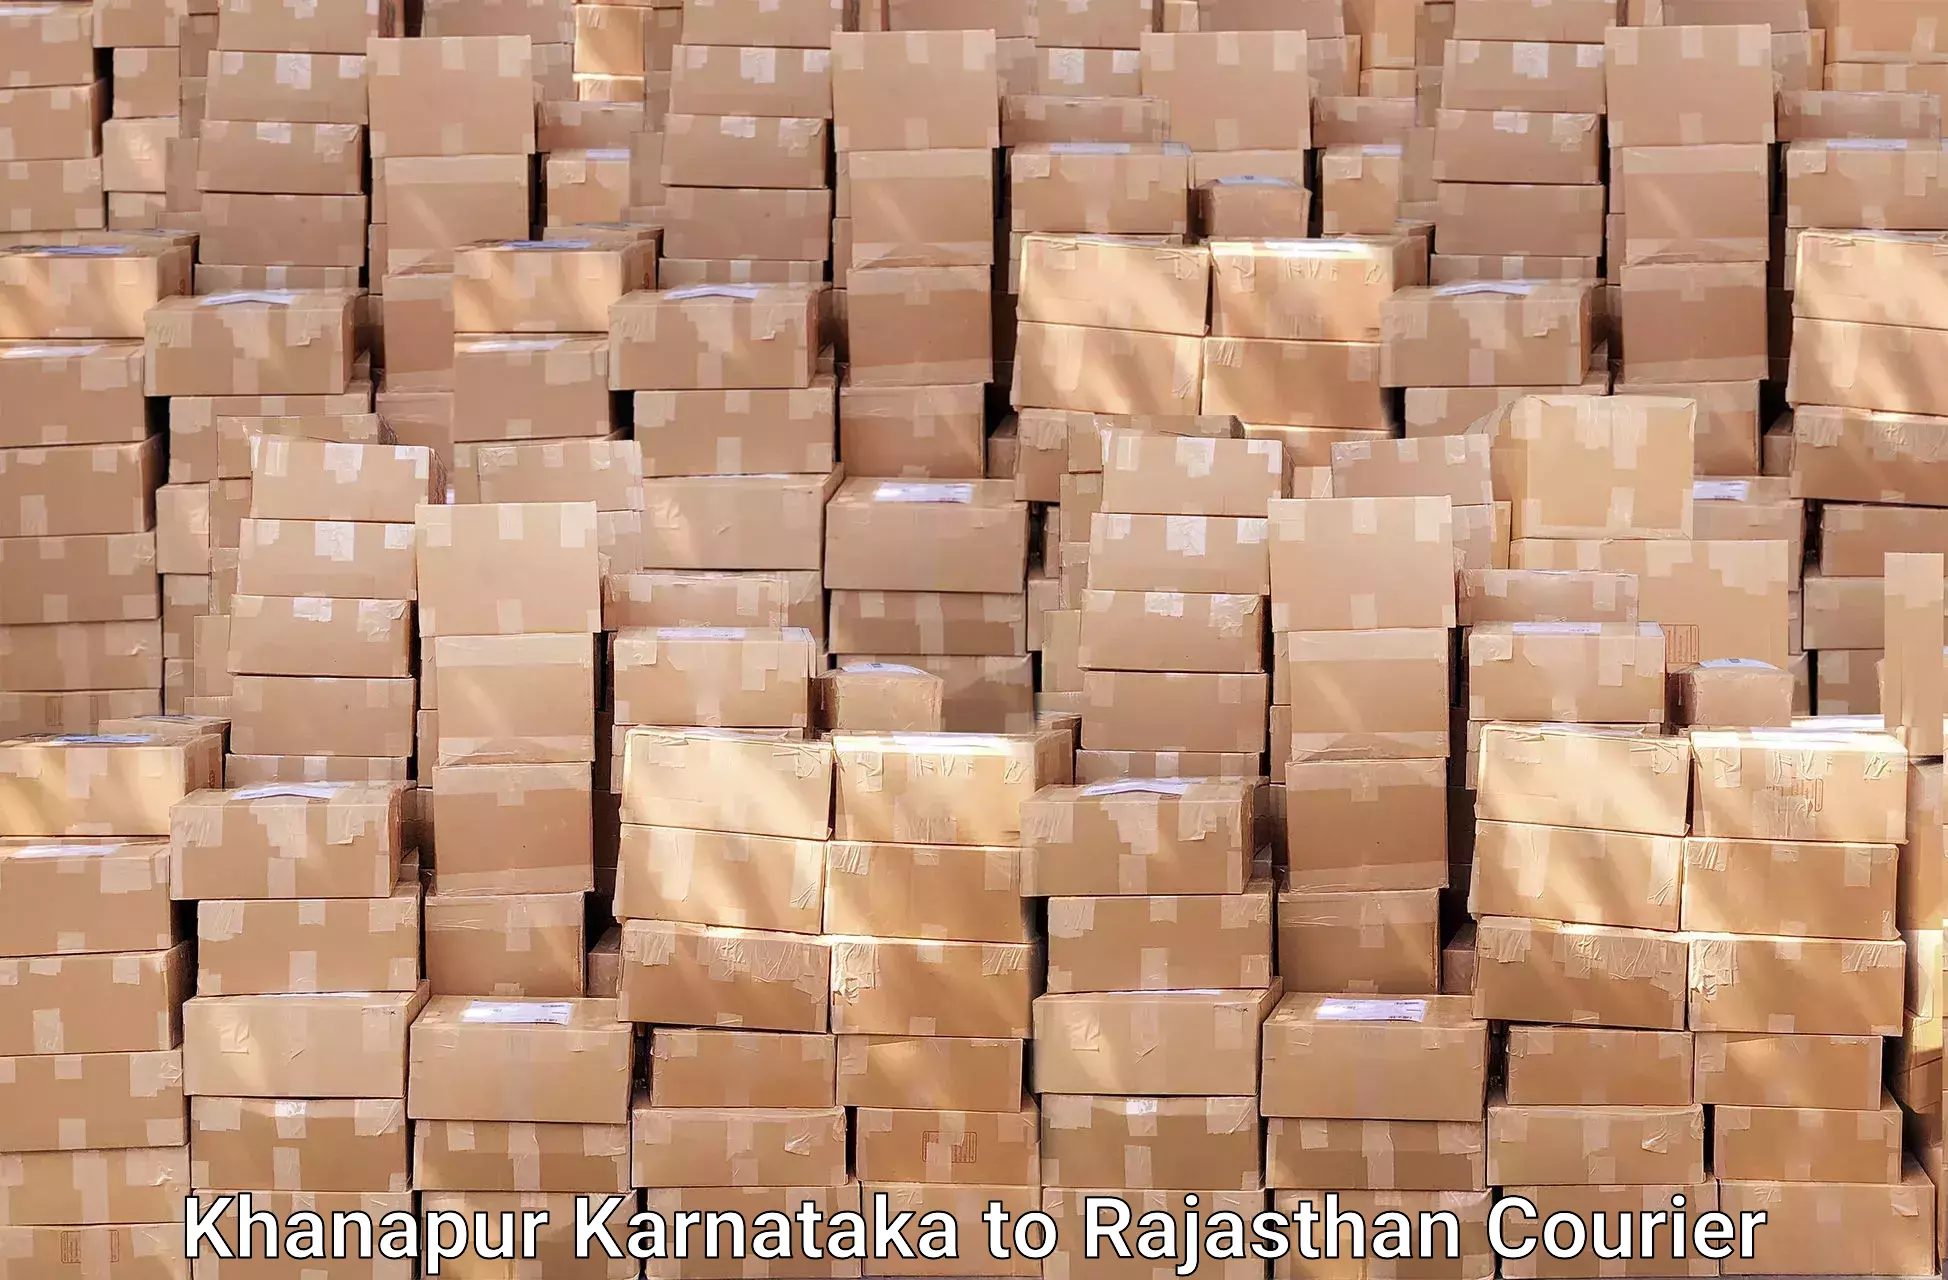 Quality relocation services Khanapur Karnataka to Merta